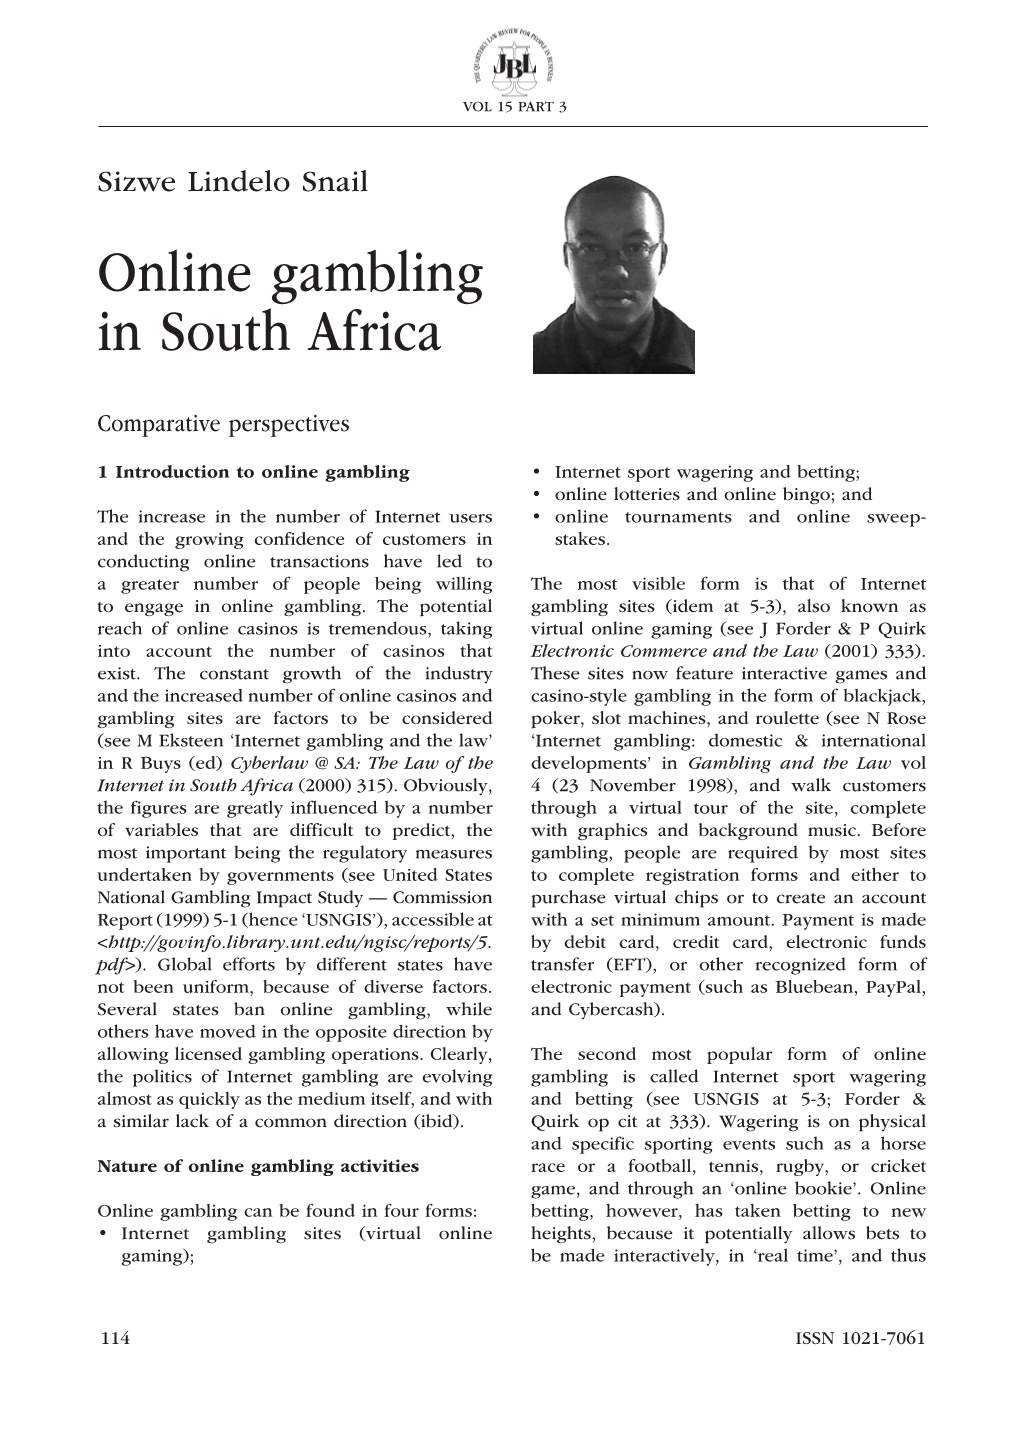 Online Gambling in South Africa